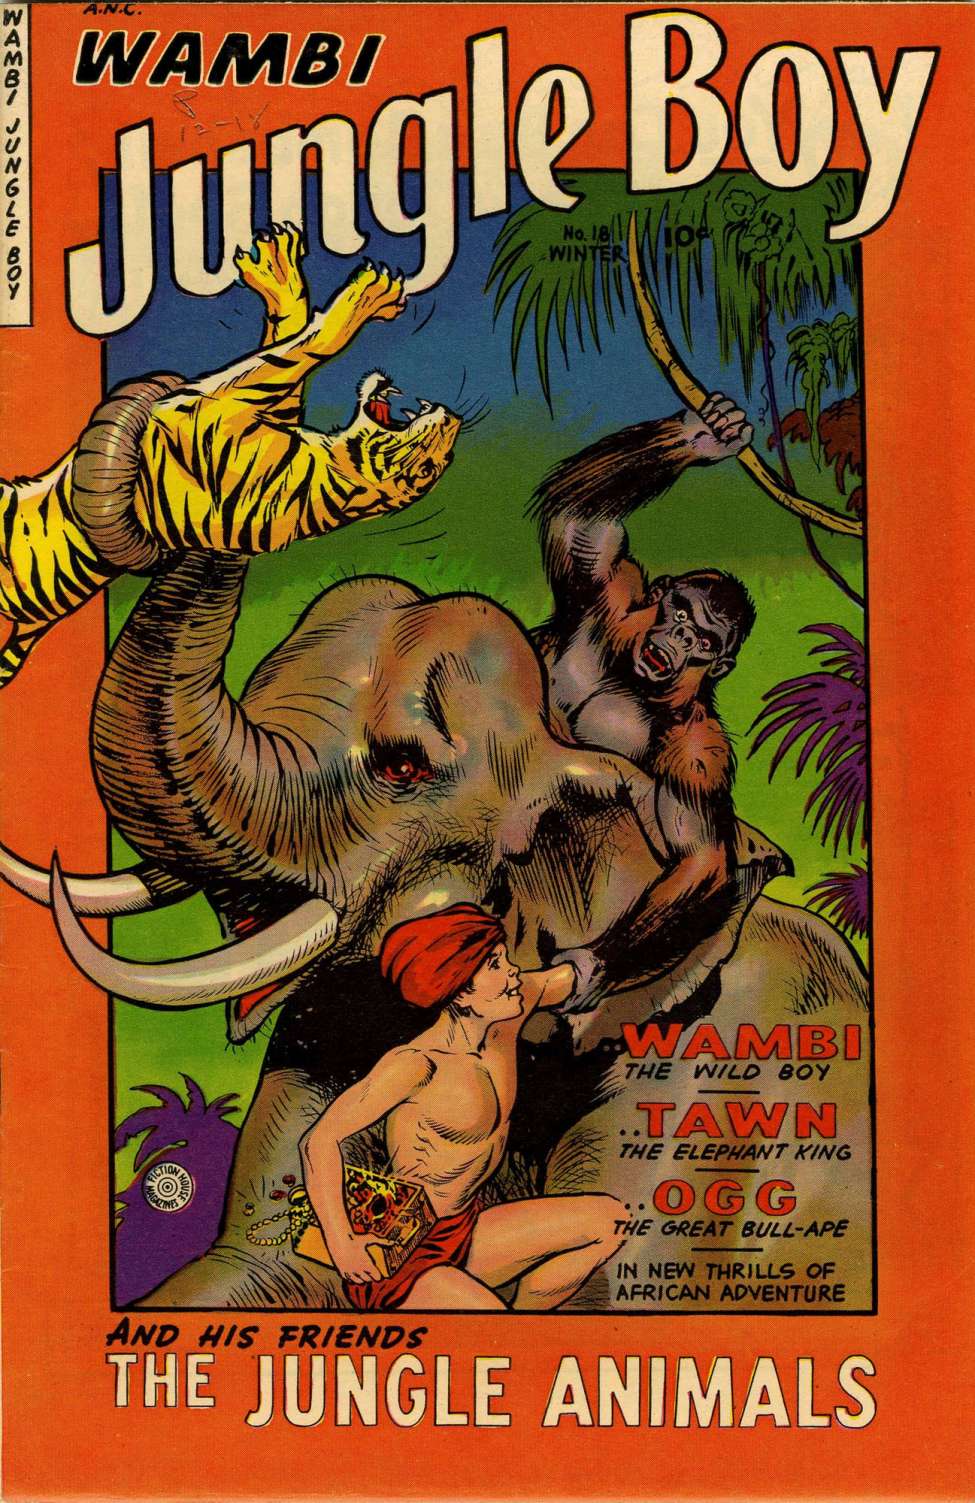 Comic Book Cover For Wambi, Jungle Boy 18 (alt) - Version 2